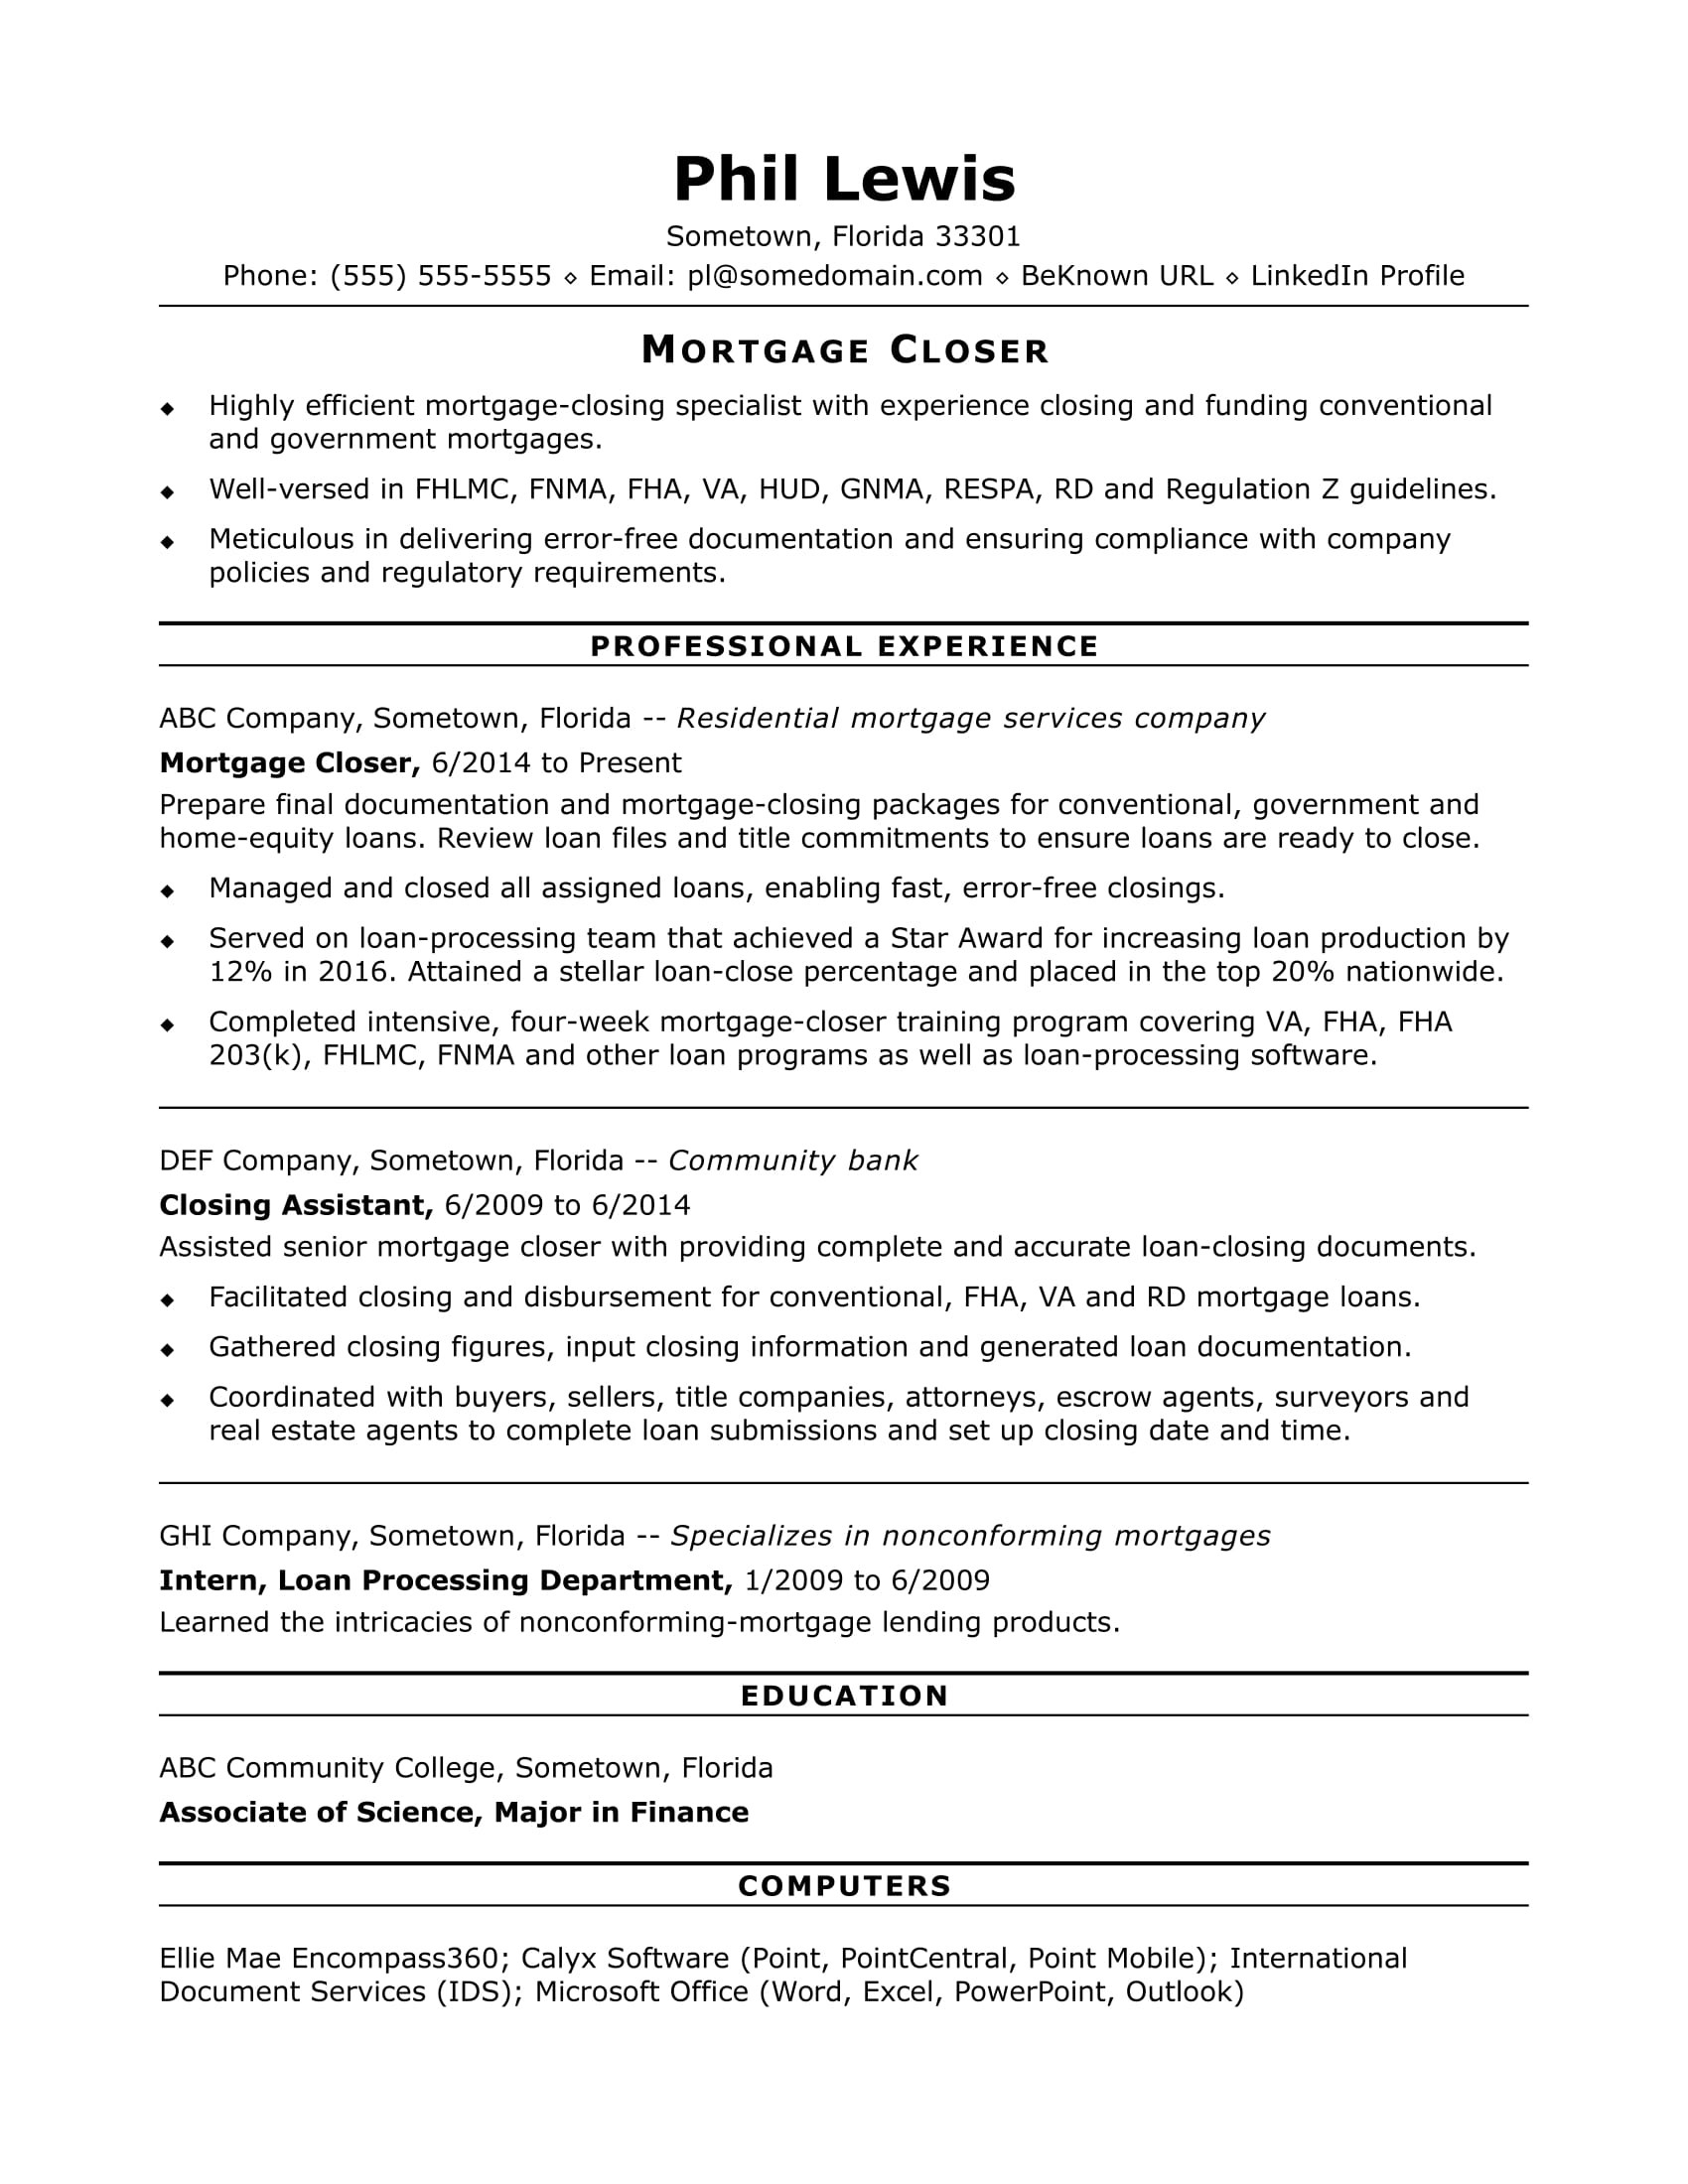 Sample Resume for Senior Mortgage originator Mortgage Closer Resume Sample Monster.com